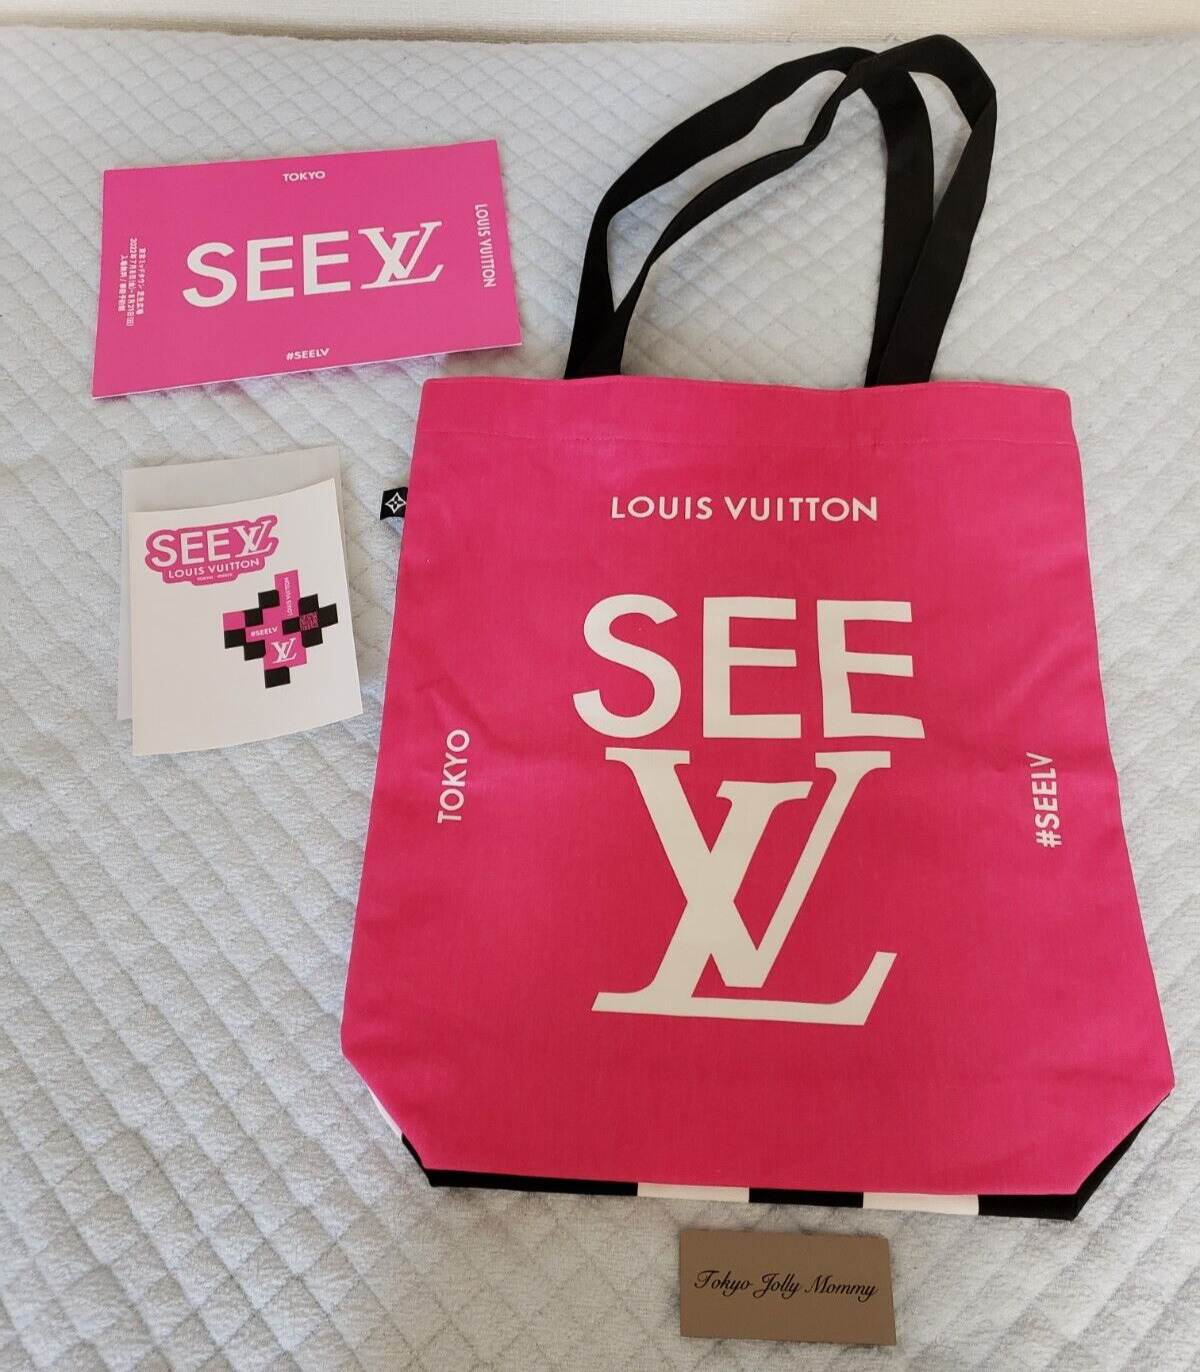 Louis Vuitton SEE LV Tote Bag Sticker Promo Tokyo Exhibition 